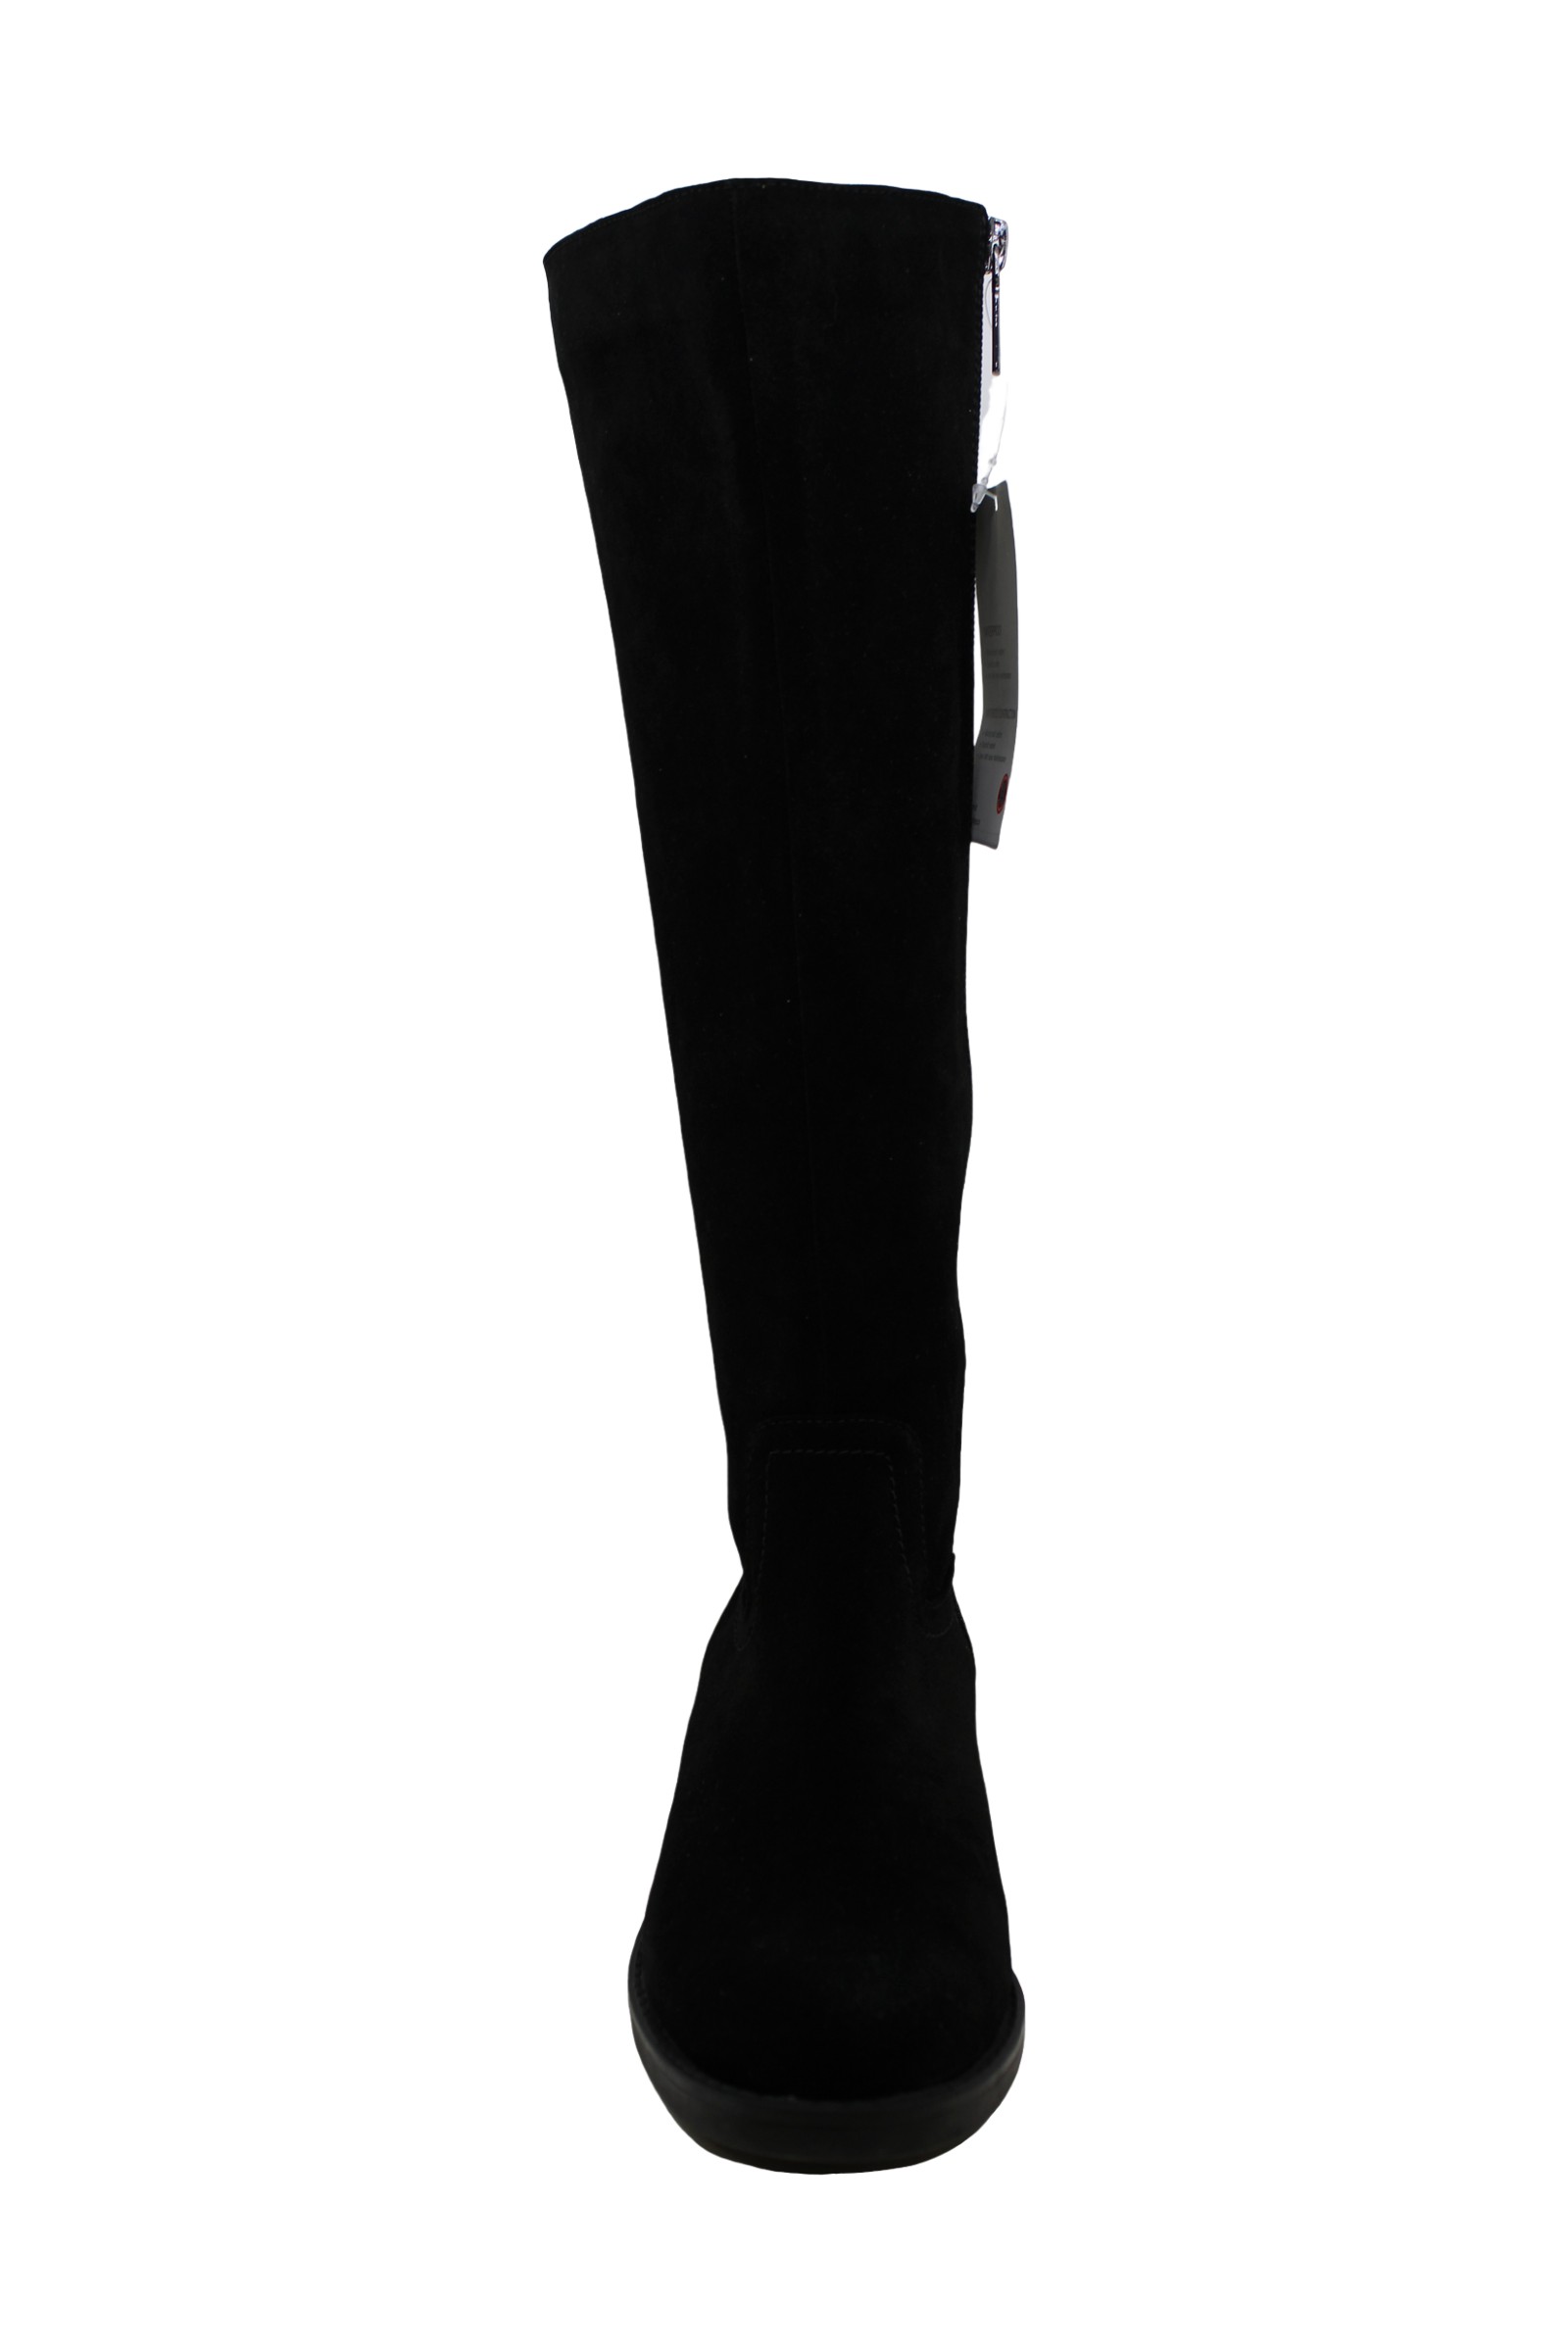 Aqua College Womens Elsa Leather Almond Toe Mid-Calf Fashion Boots | eBay